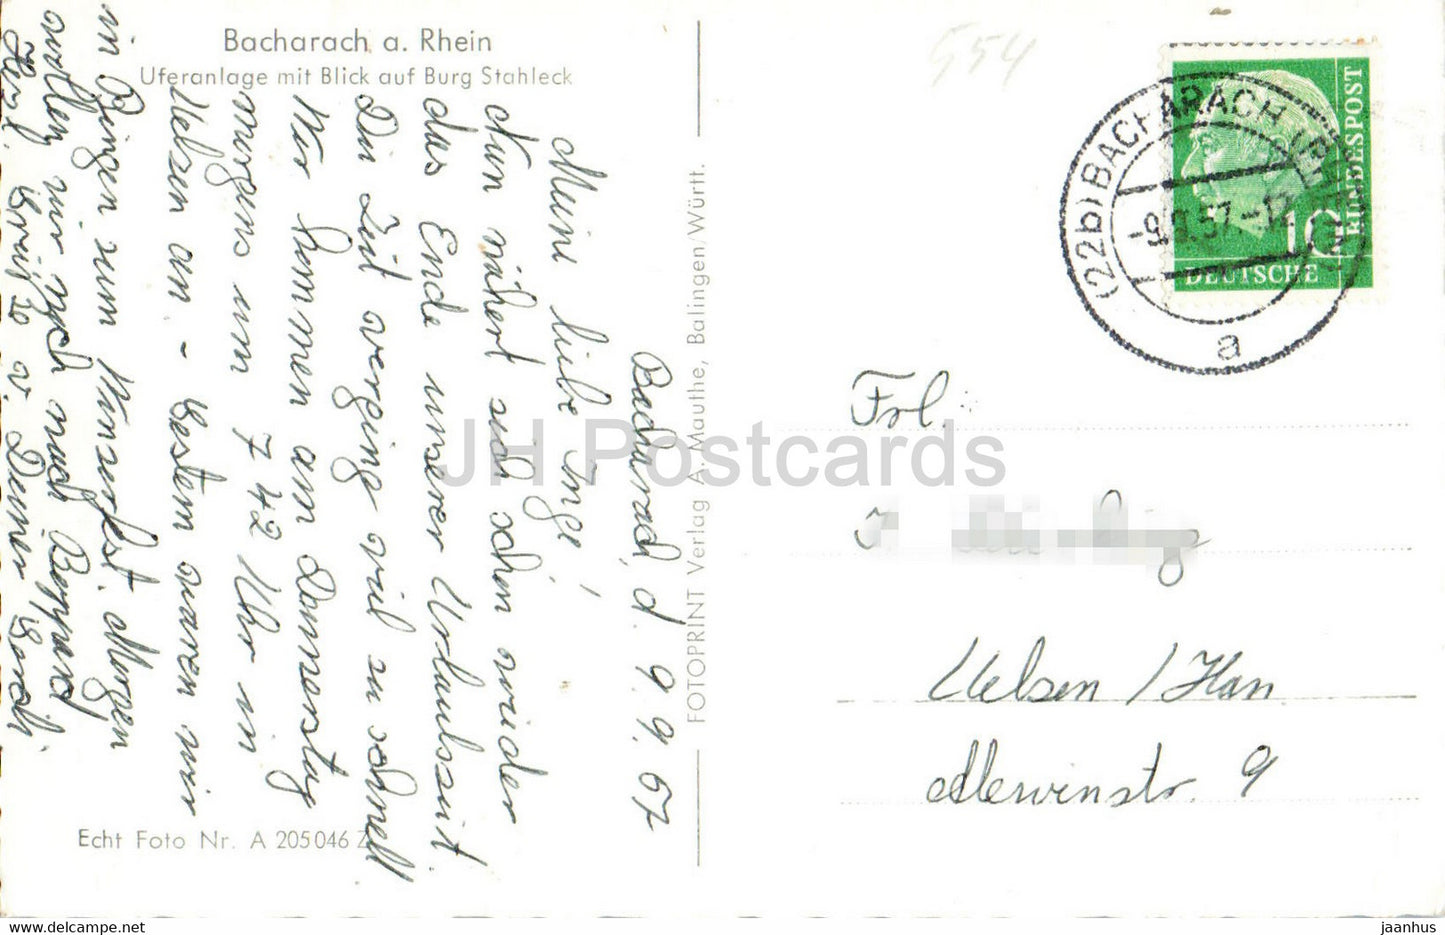 Bacharach a Rhein - Uferanlage mit Blick auf Burg Stahleck - old postcard - 1957 - Germany - used